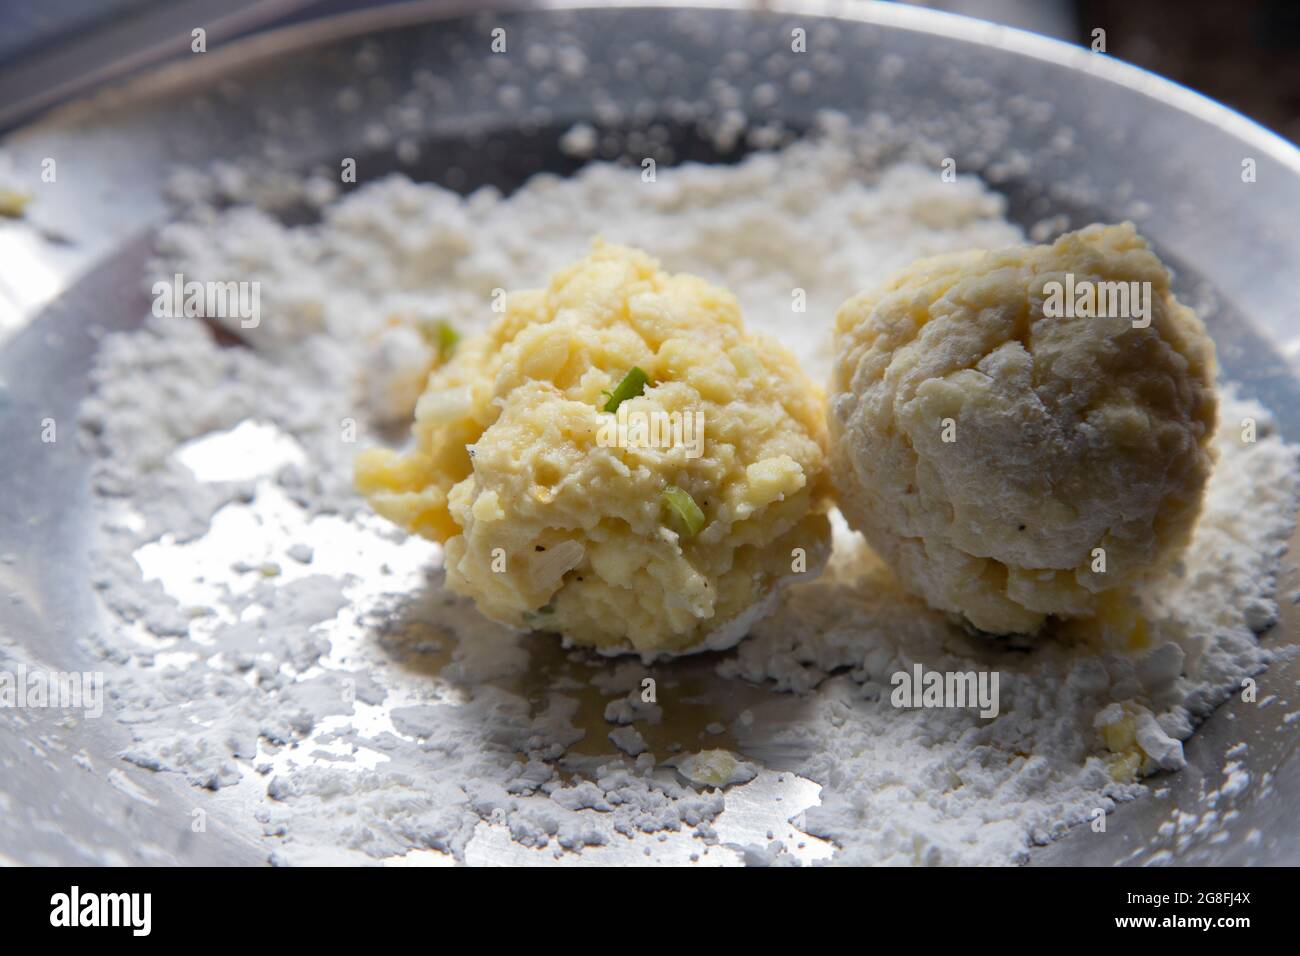 breadfruit balls in flour in a dish Stock Photo